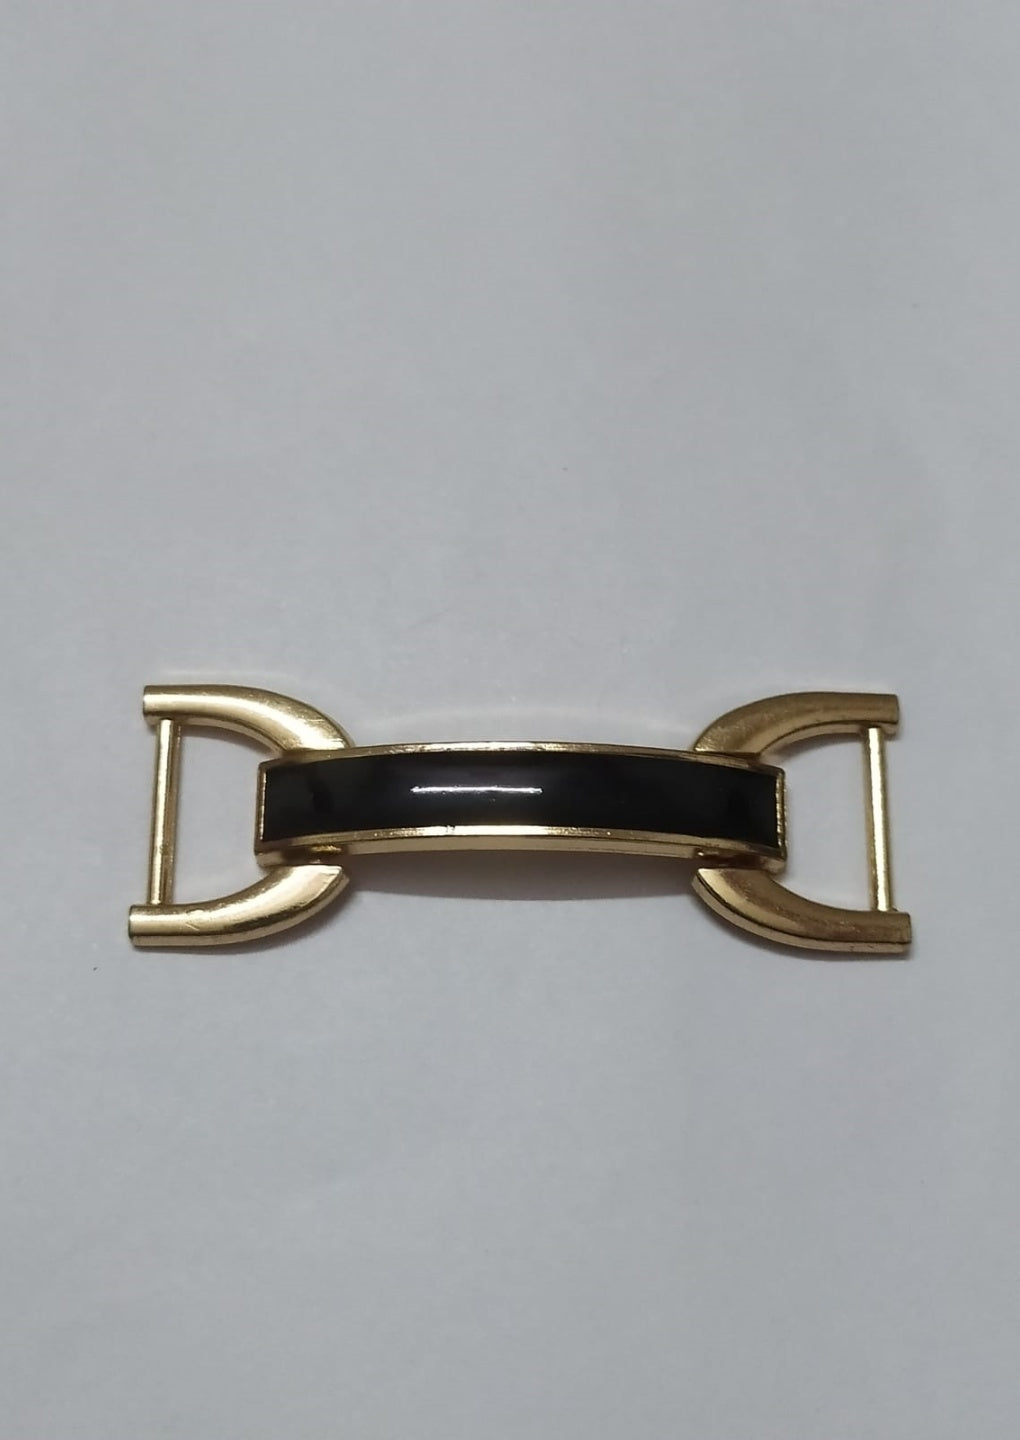 Chain Zinc Alloy Men Shoe Buckles Accessories Customised Metal Shoe Decoration Pin Buckle For Men-9